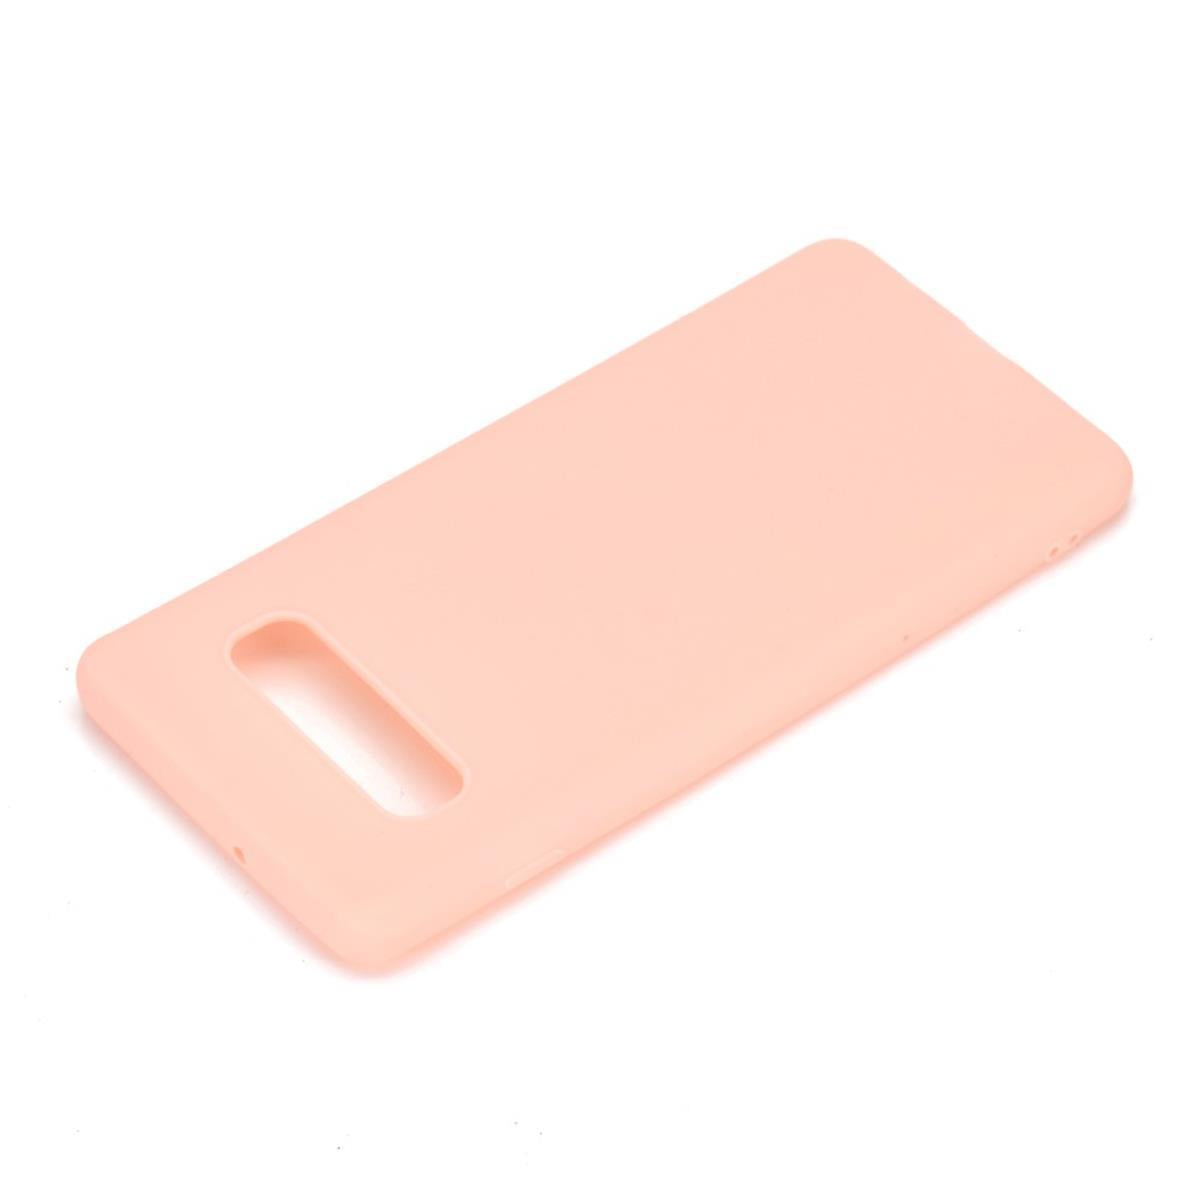 Hülle für Samsung Galaxy S10+ (Plus) Handyhülle Silikon Case Schutzhülle Rosa